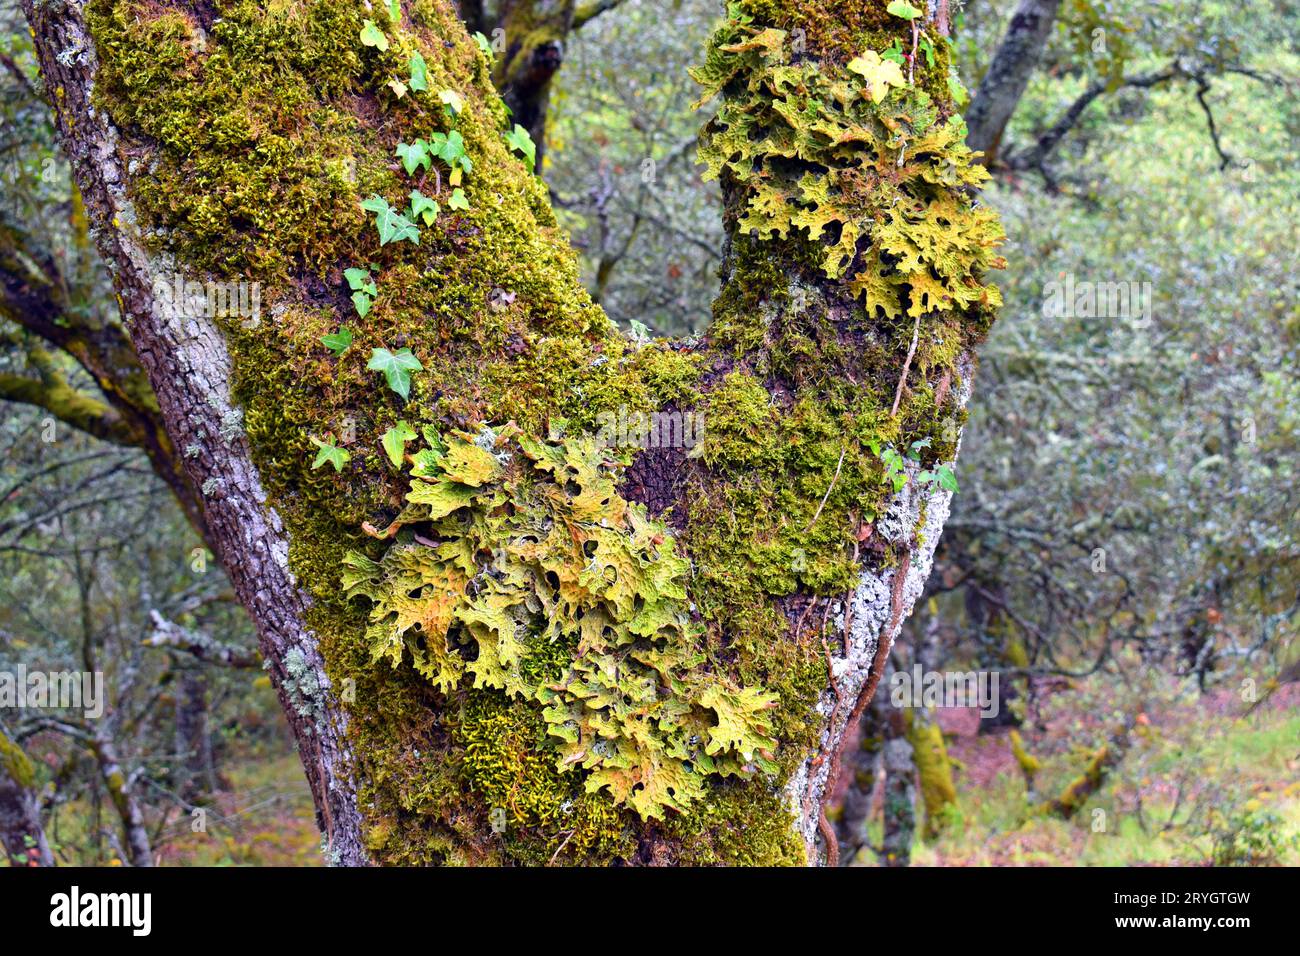 The medicinal lichen Lobaria pulmonaria on the trunk of an oak tree. Stock Photo